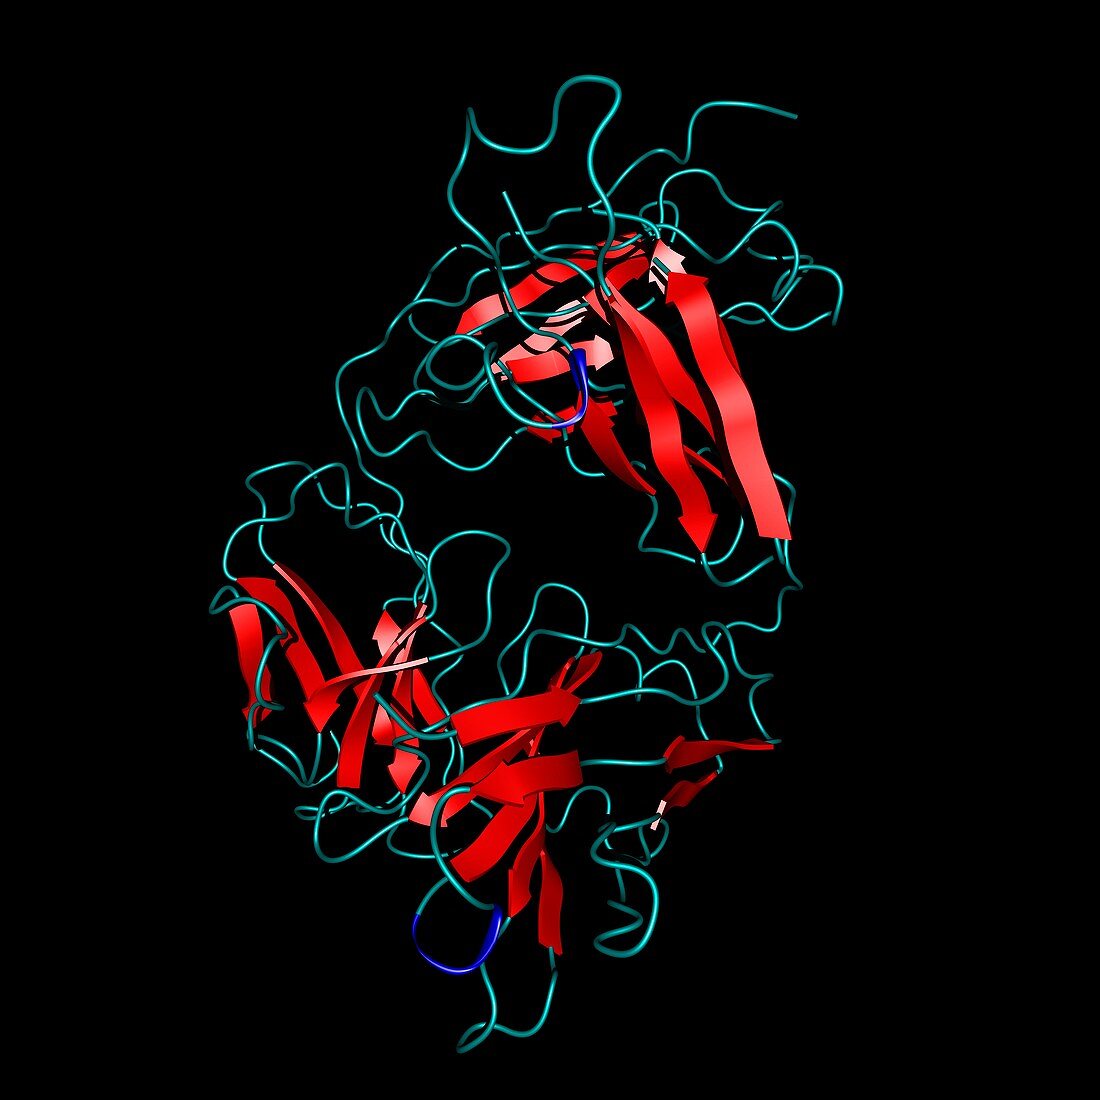 Alemtuzumab antibody molecule